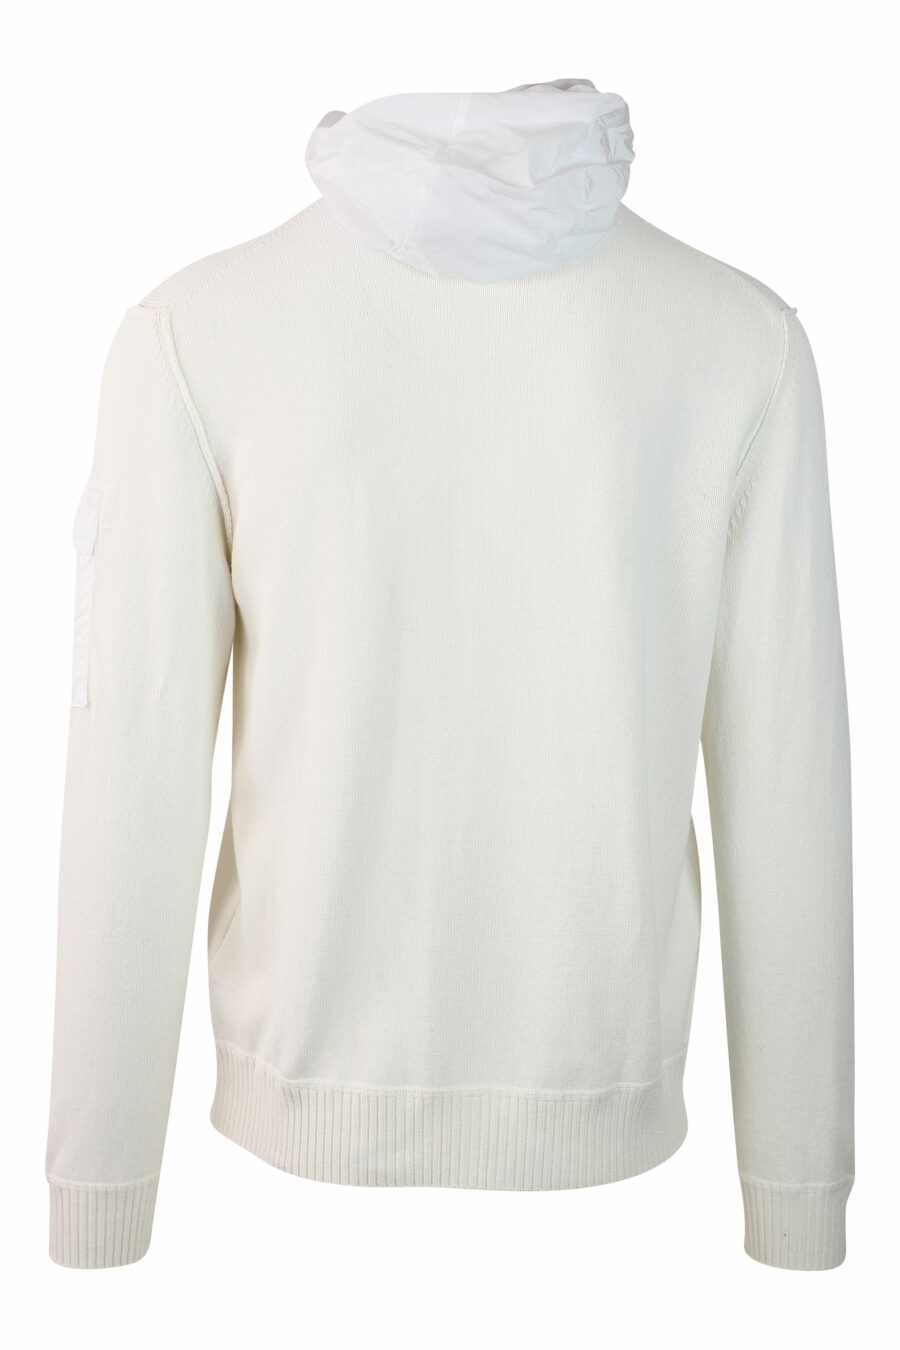 White hooded sweatshirt with zipped hood and circular mini logo - IMG 0127